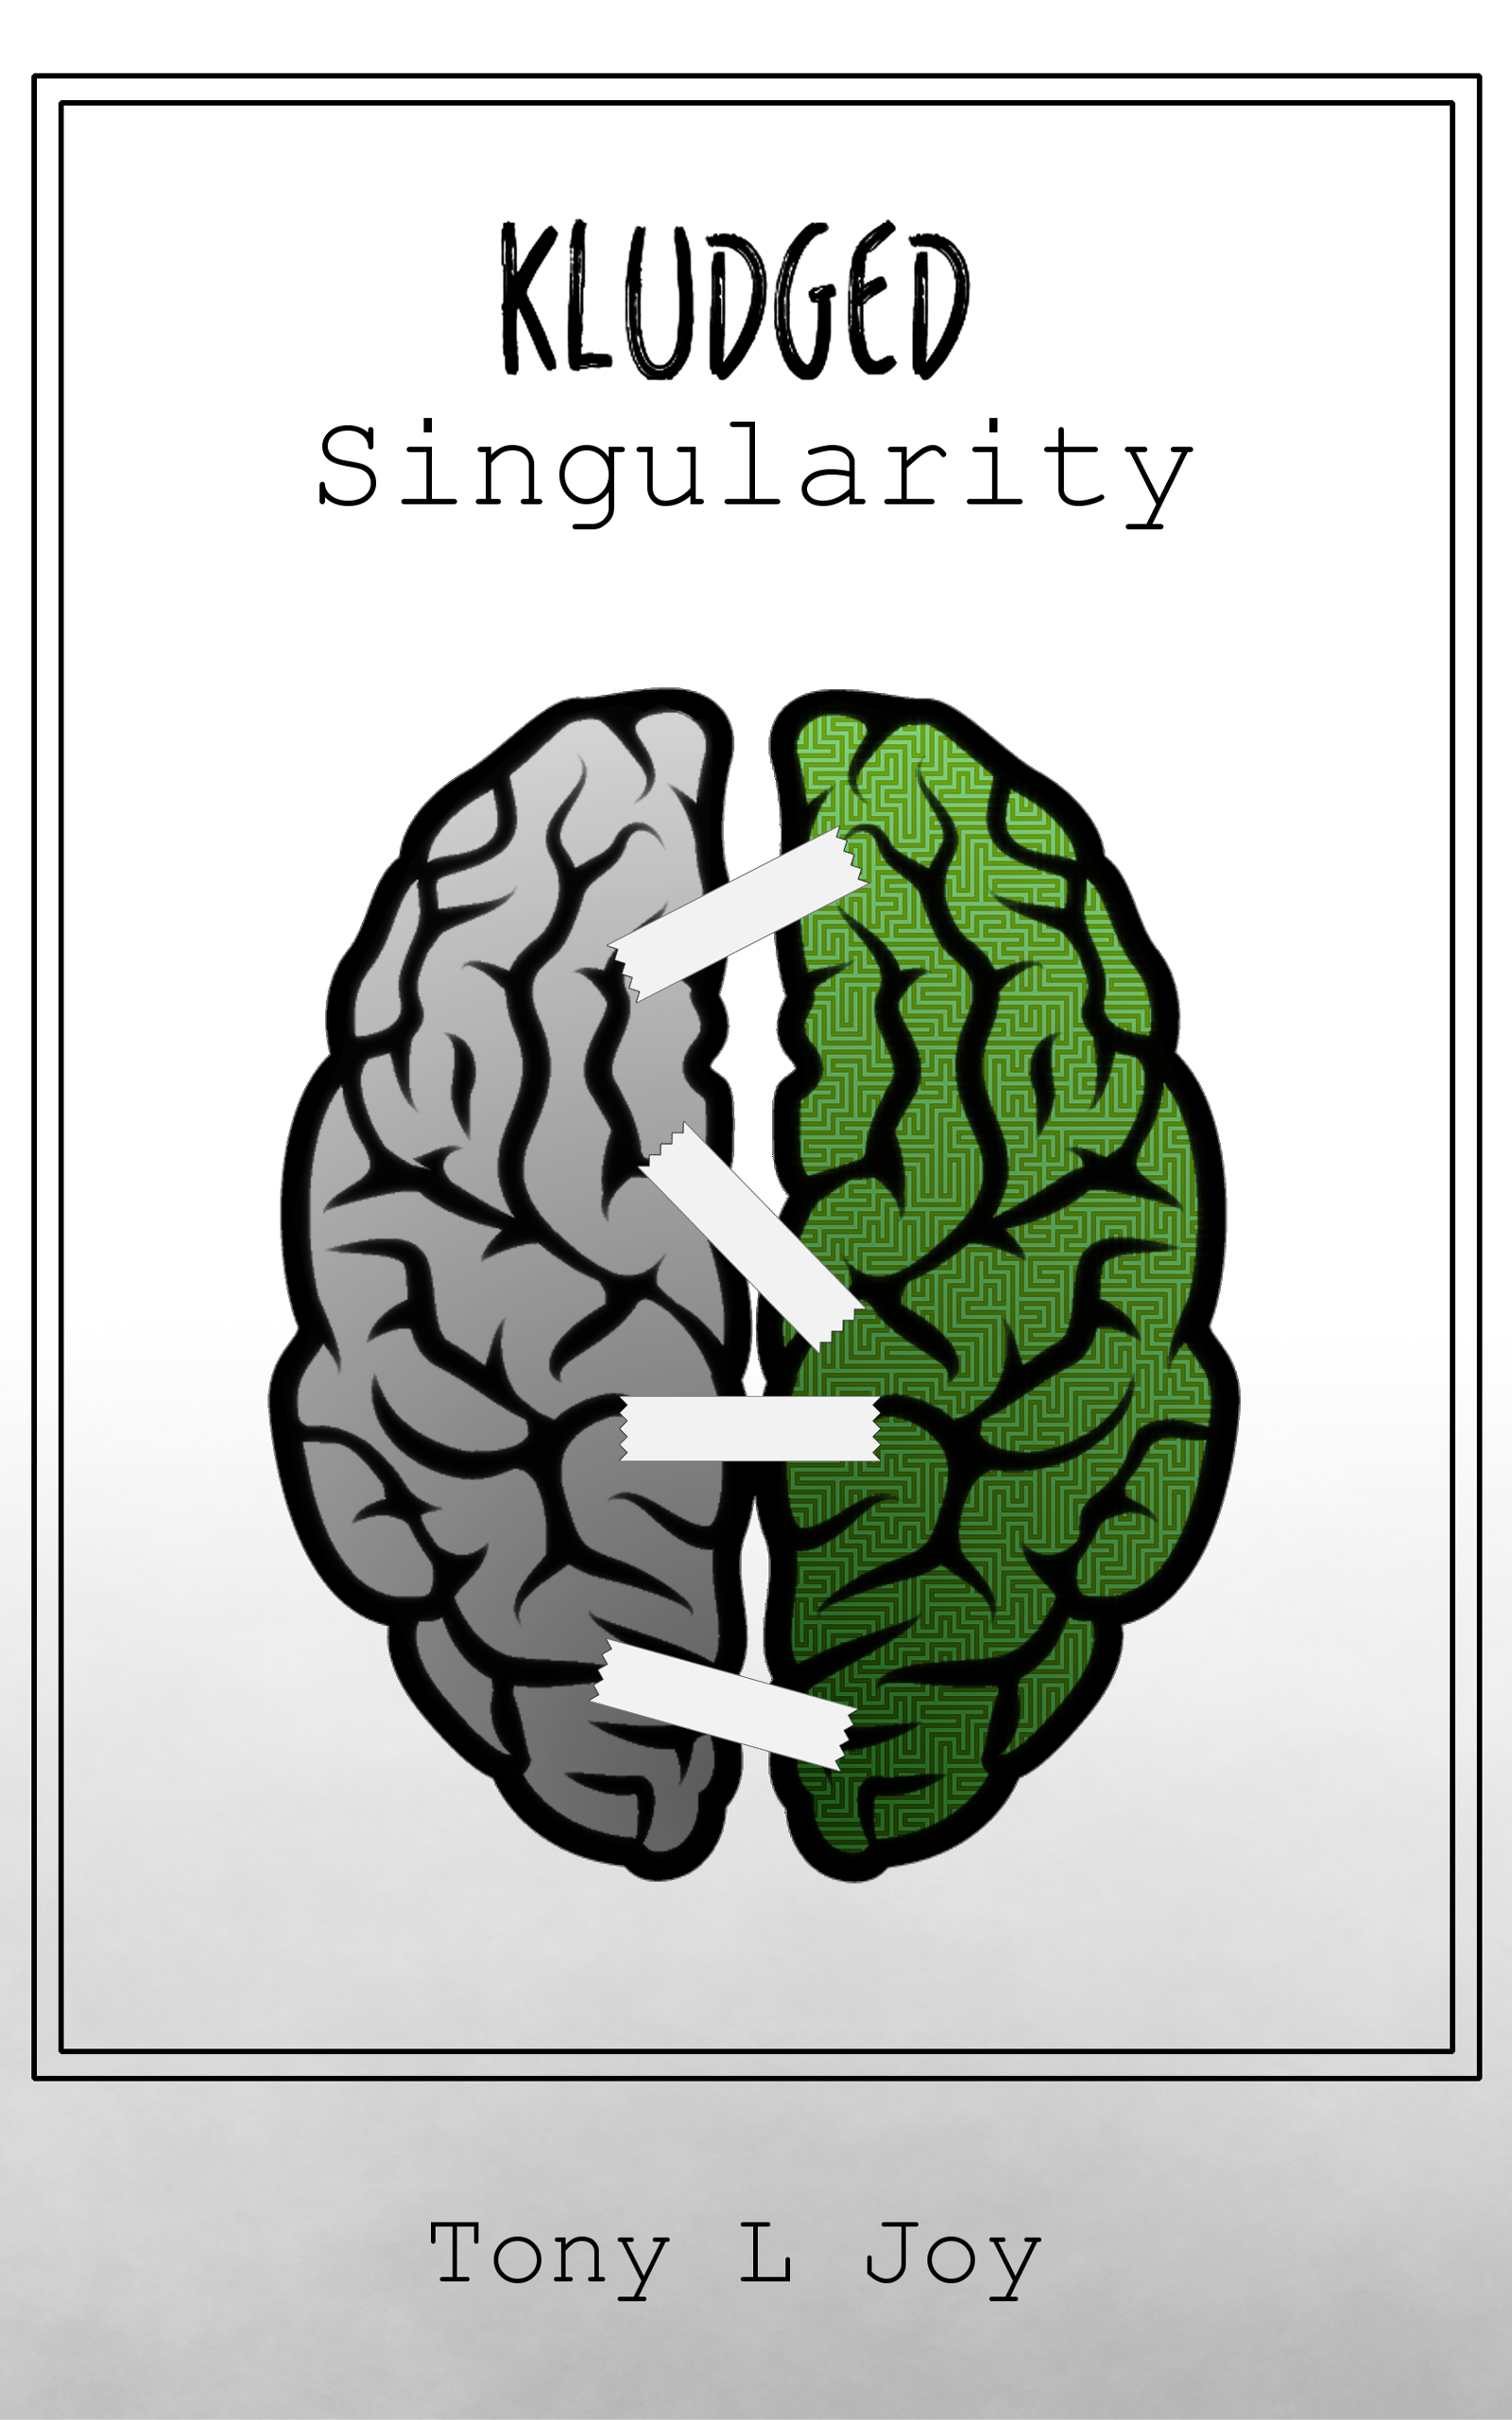 FREE: Kludged Singularity by Tony L Joy